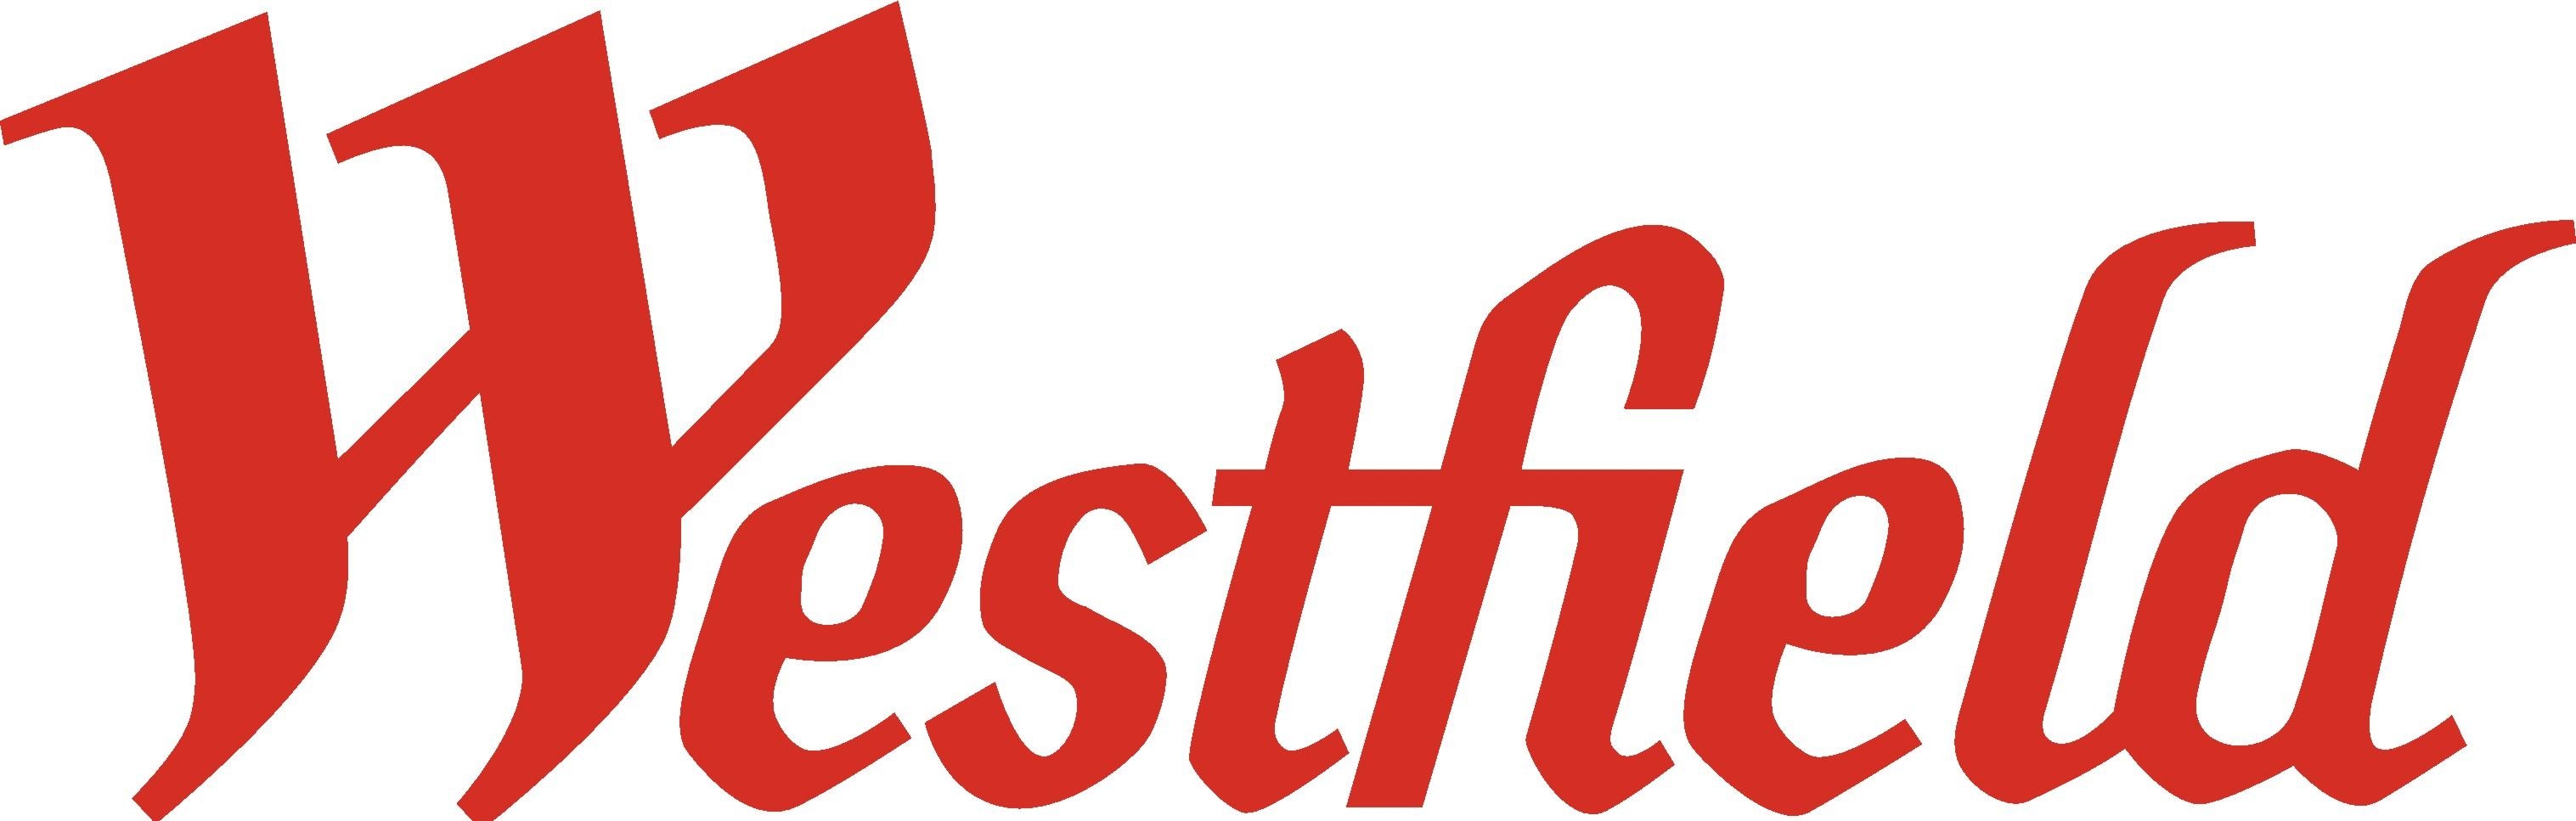 капитализация компании Westfield Group 